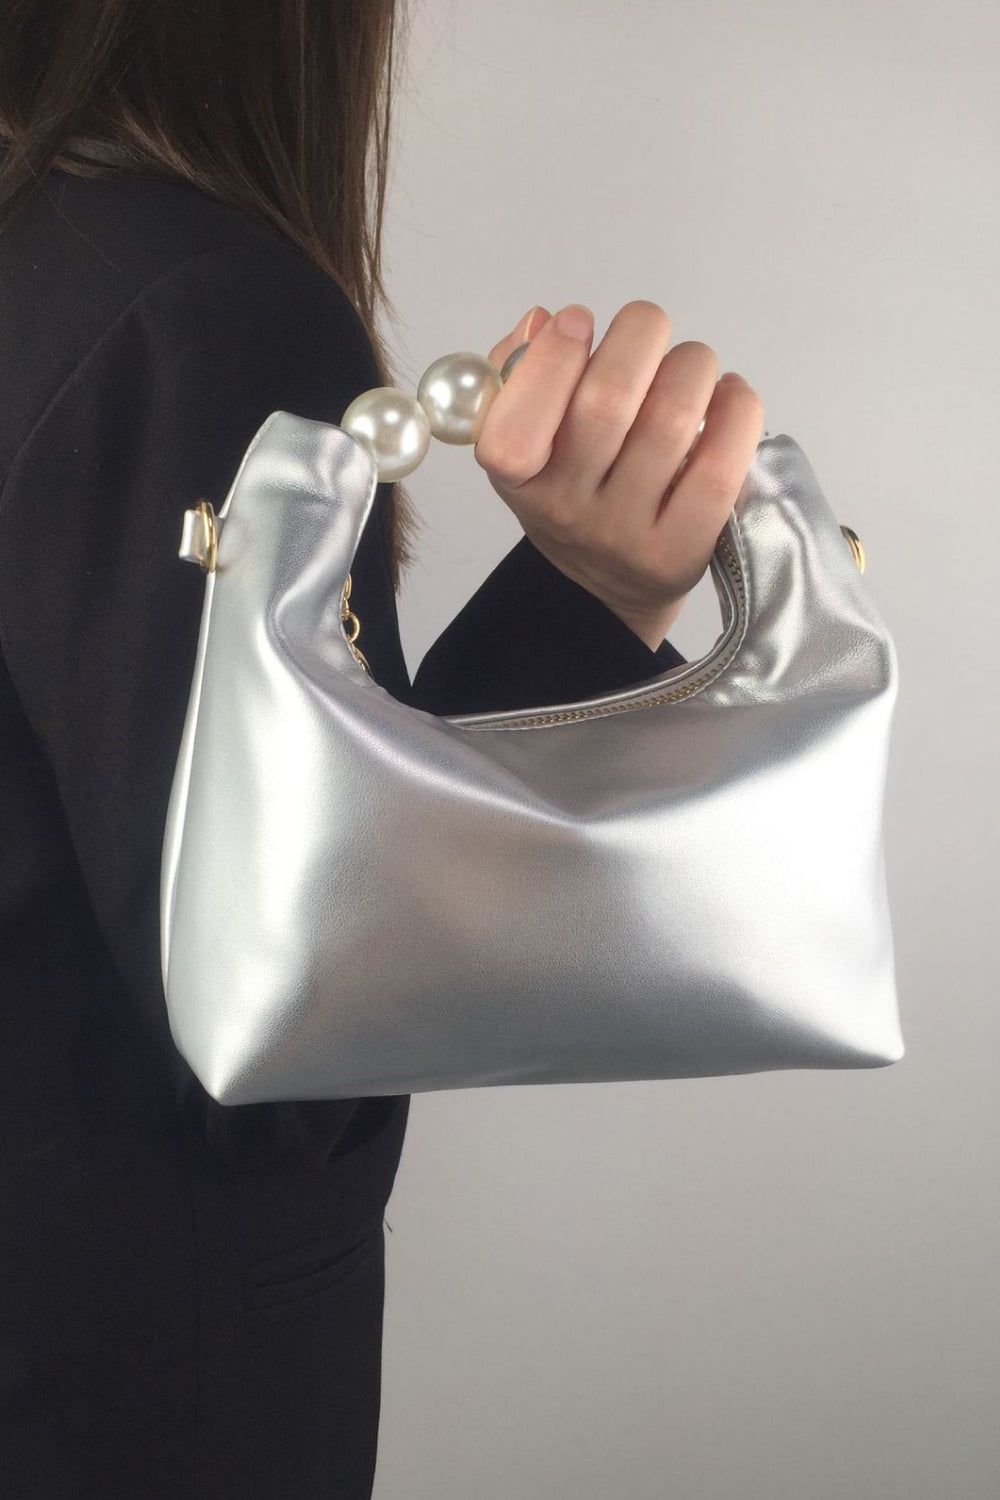 Baeful PU Leather Pearl Handbag.